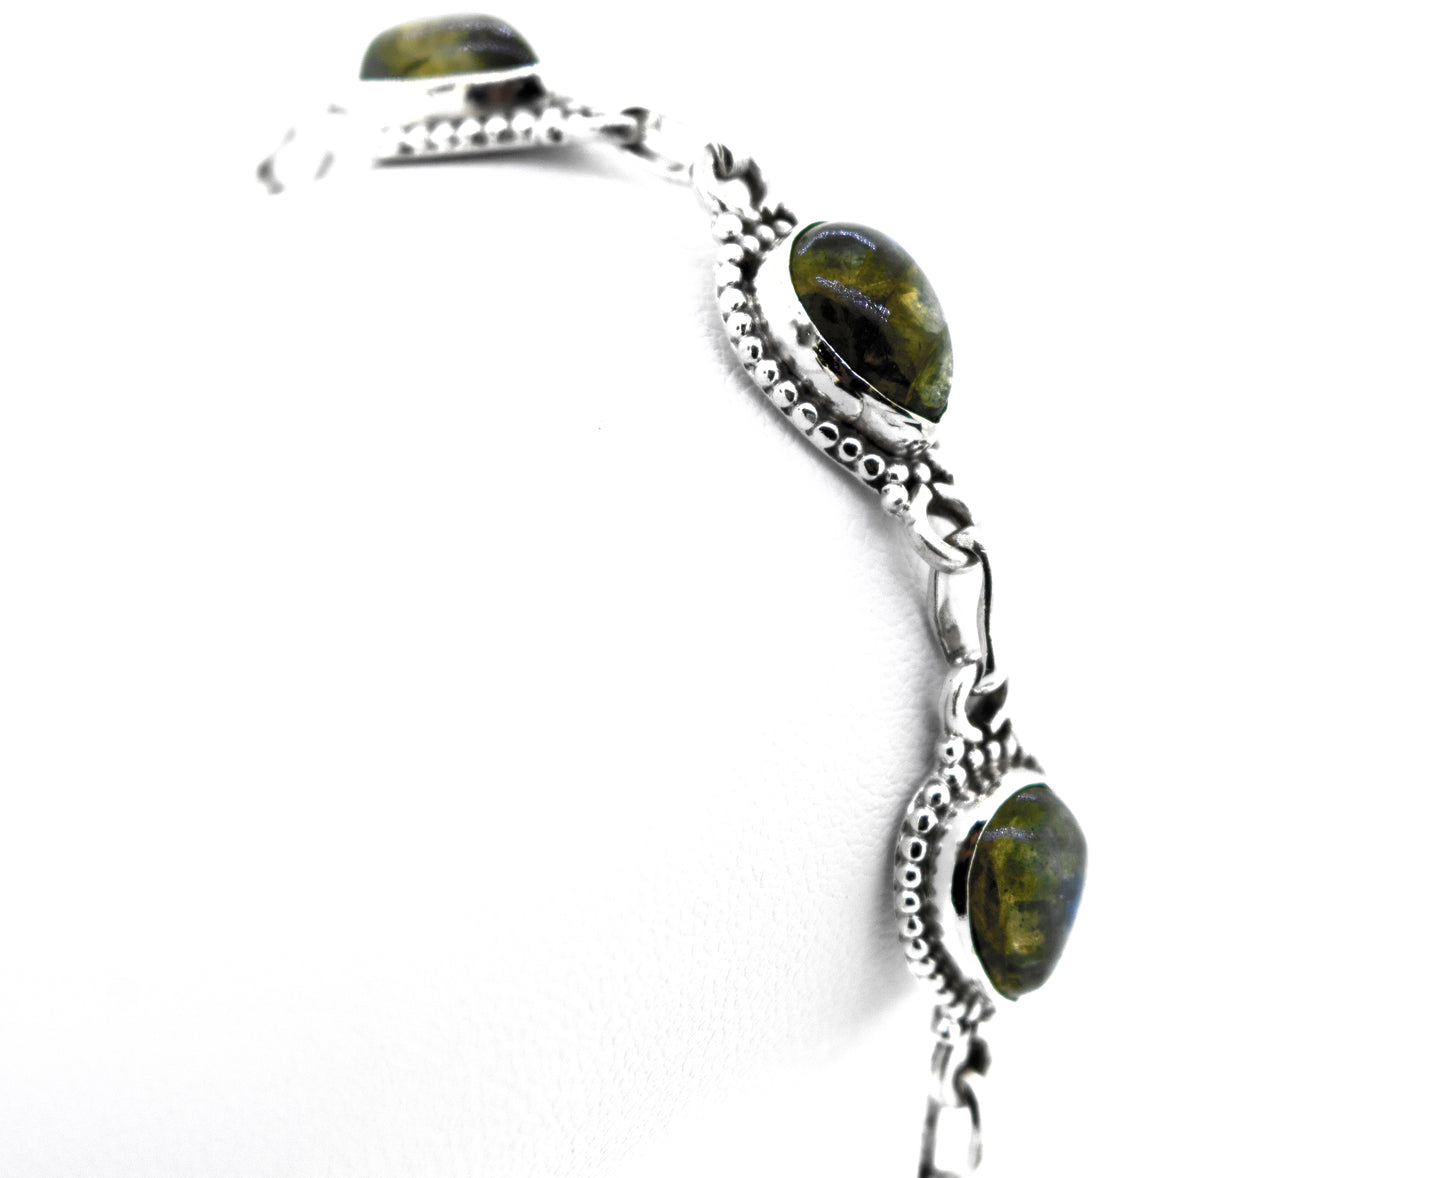 A vibrant Super Silver bracelet adorned with Teardrop Shape Labradorite stones.